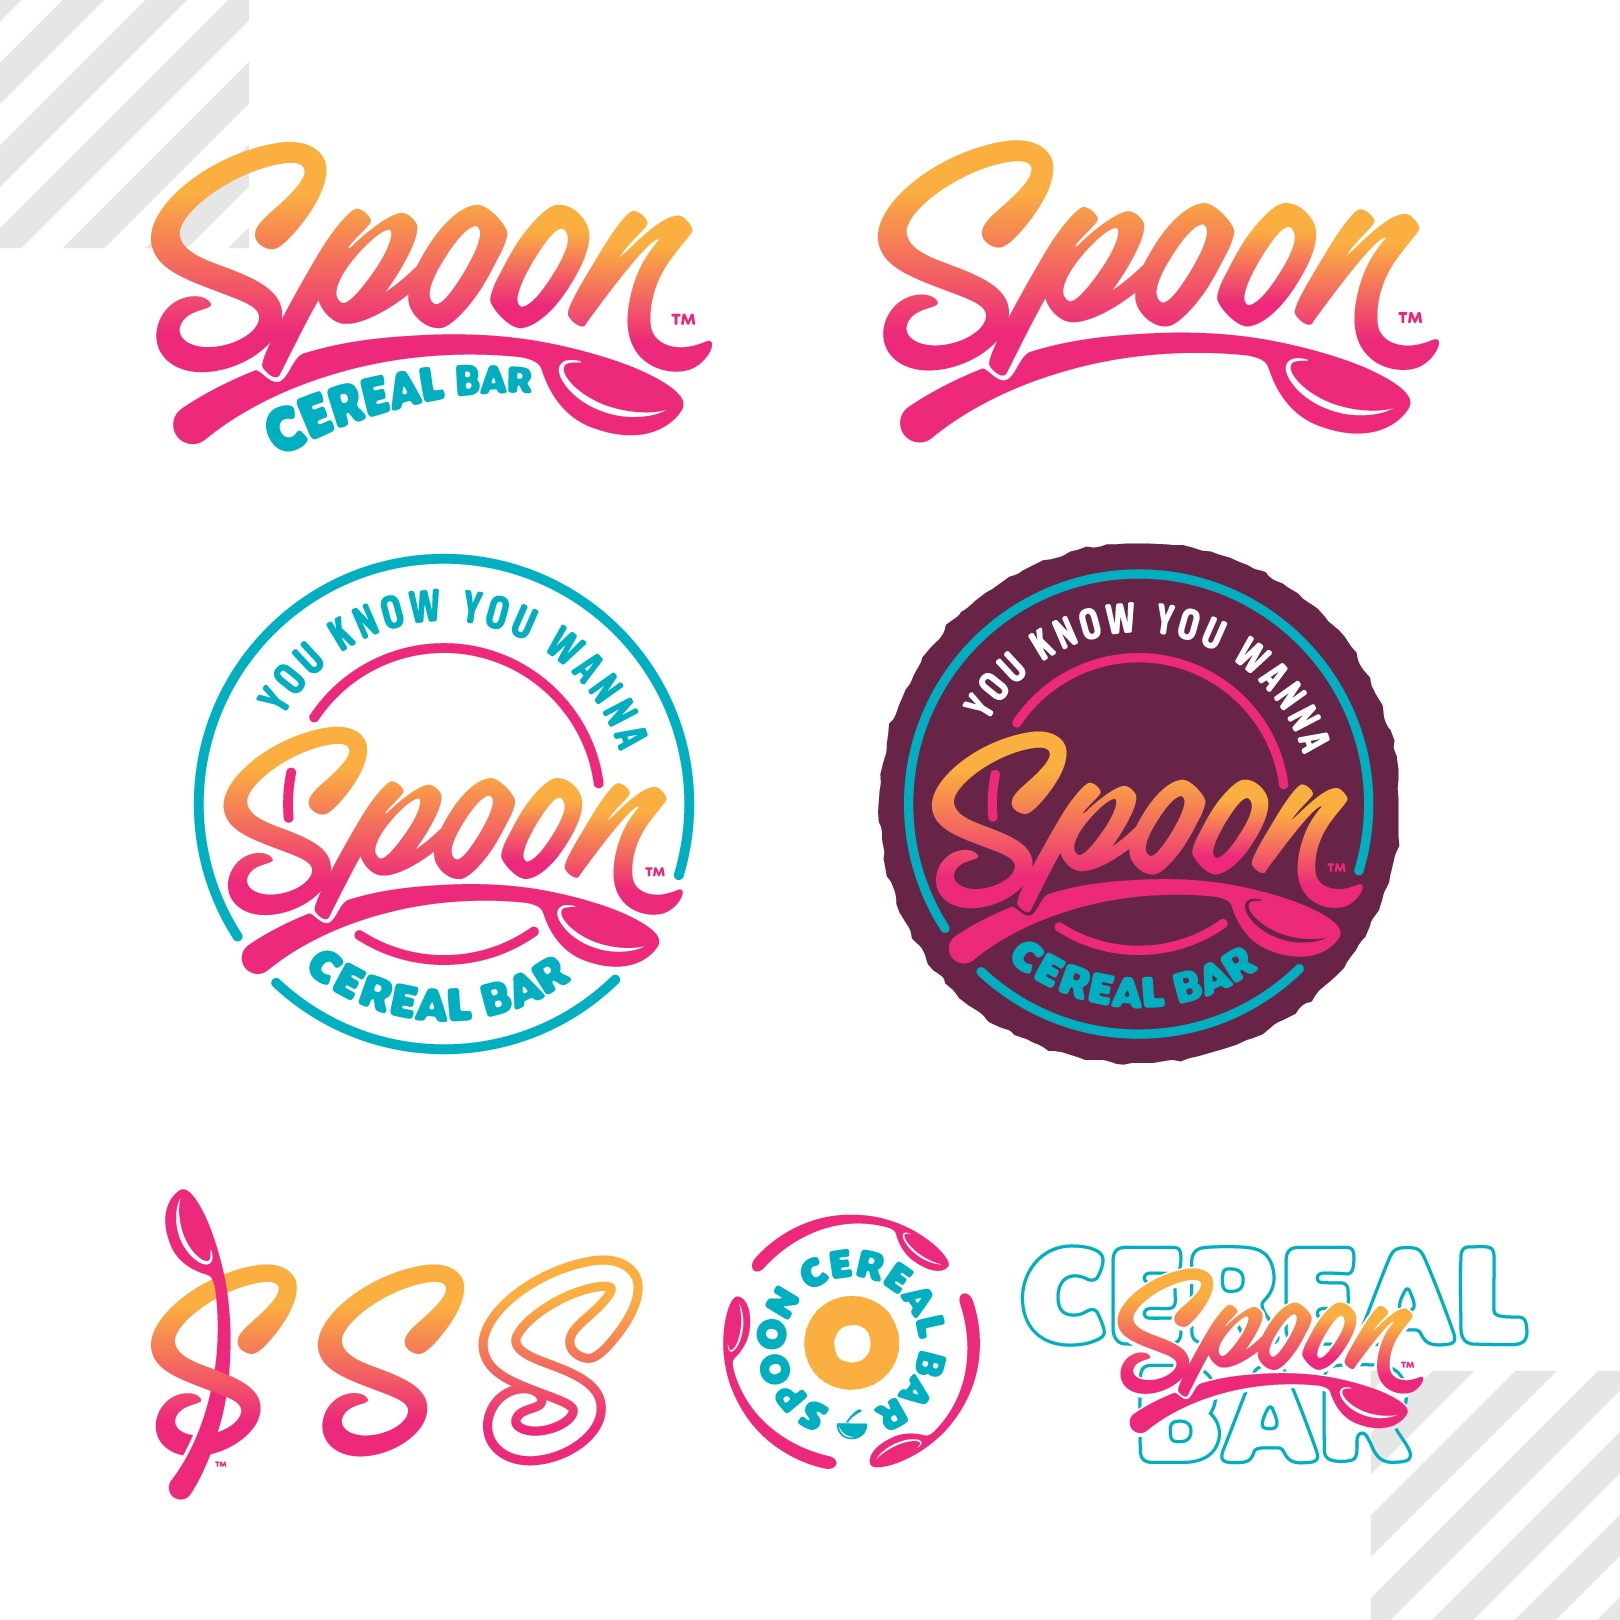 Spoon - Creative Services